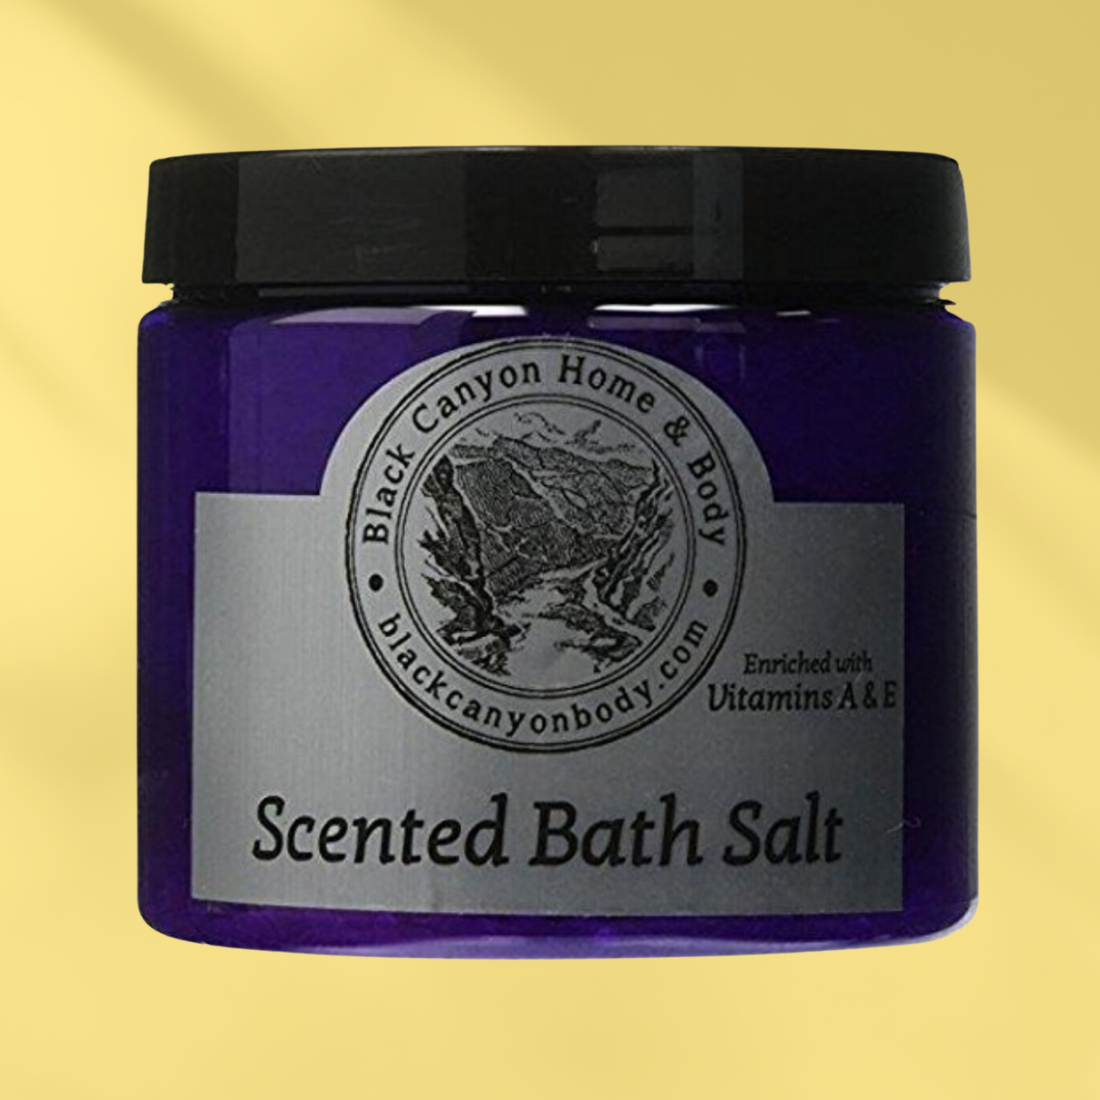 Black Canyon Mocha Medley Scented Epsom Salt Bath Soak